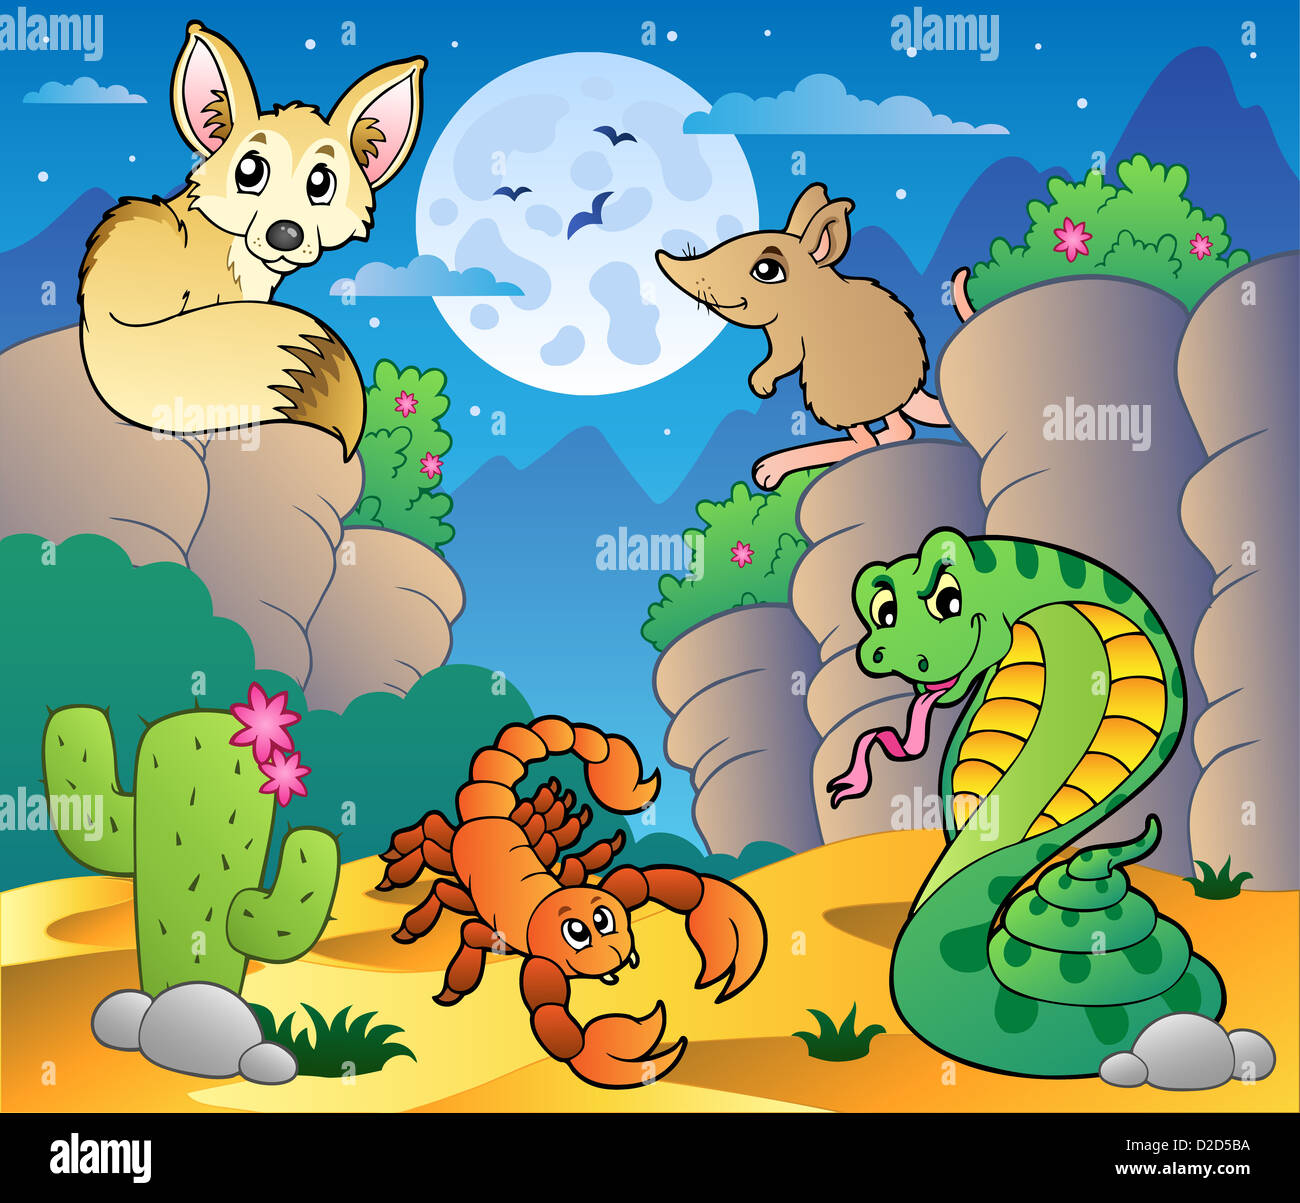 Desert scene with various animals 5 - picture illustration Stock Photo -  Alamy